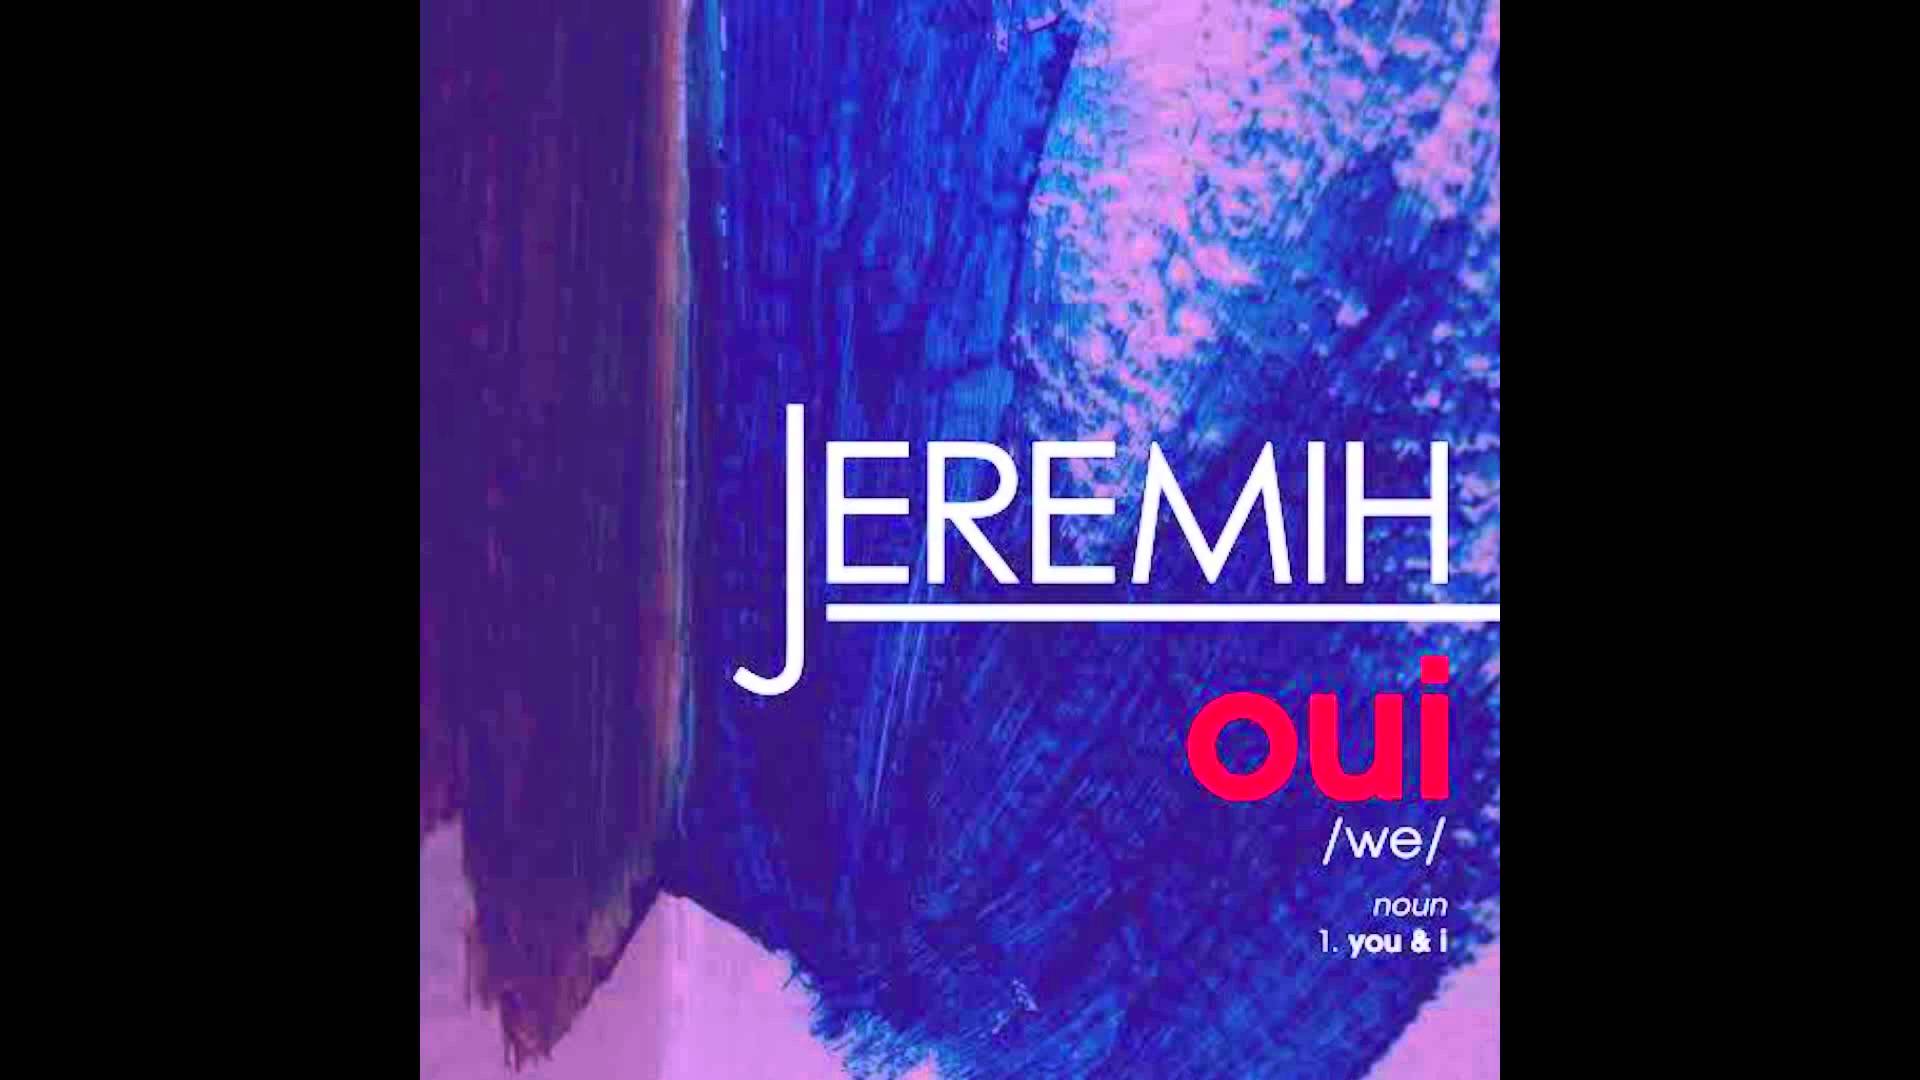 Jeremih - oui